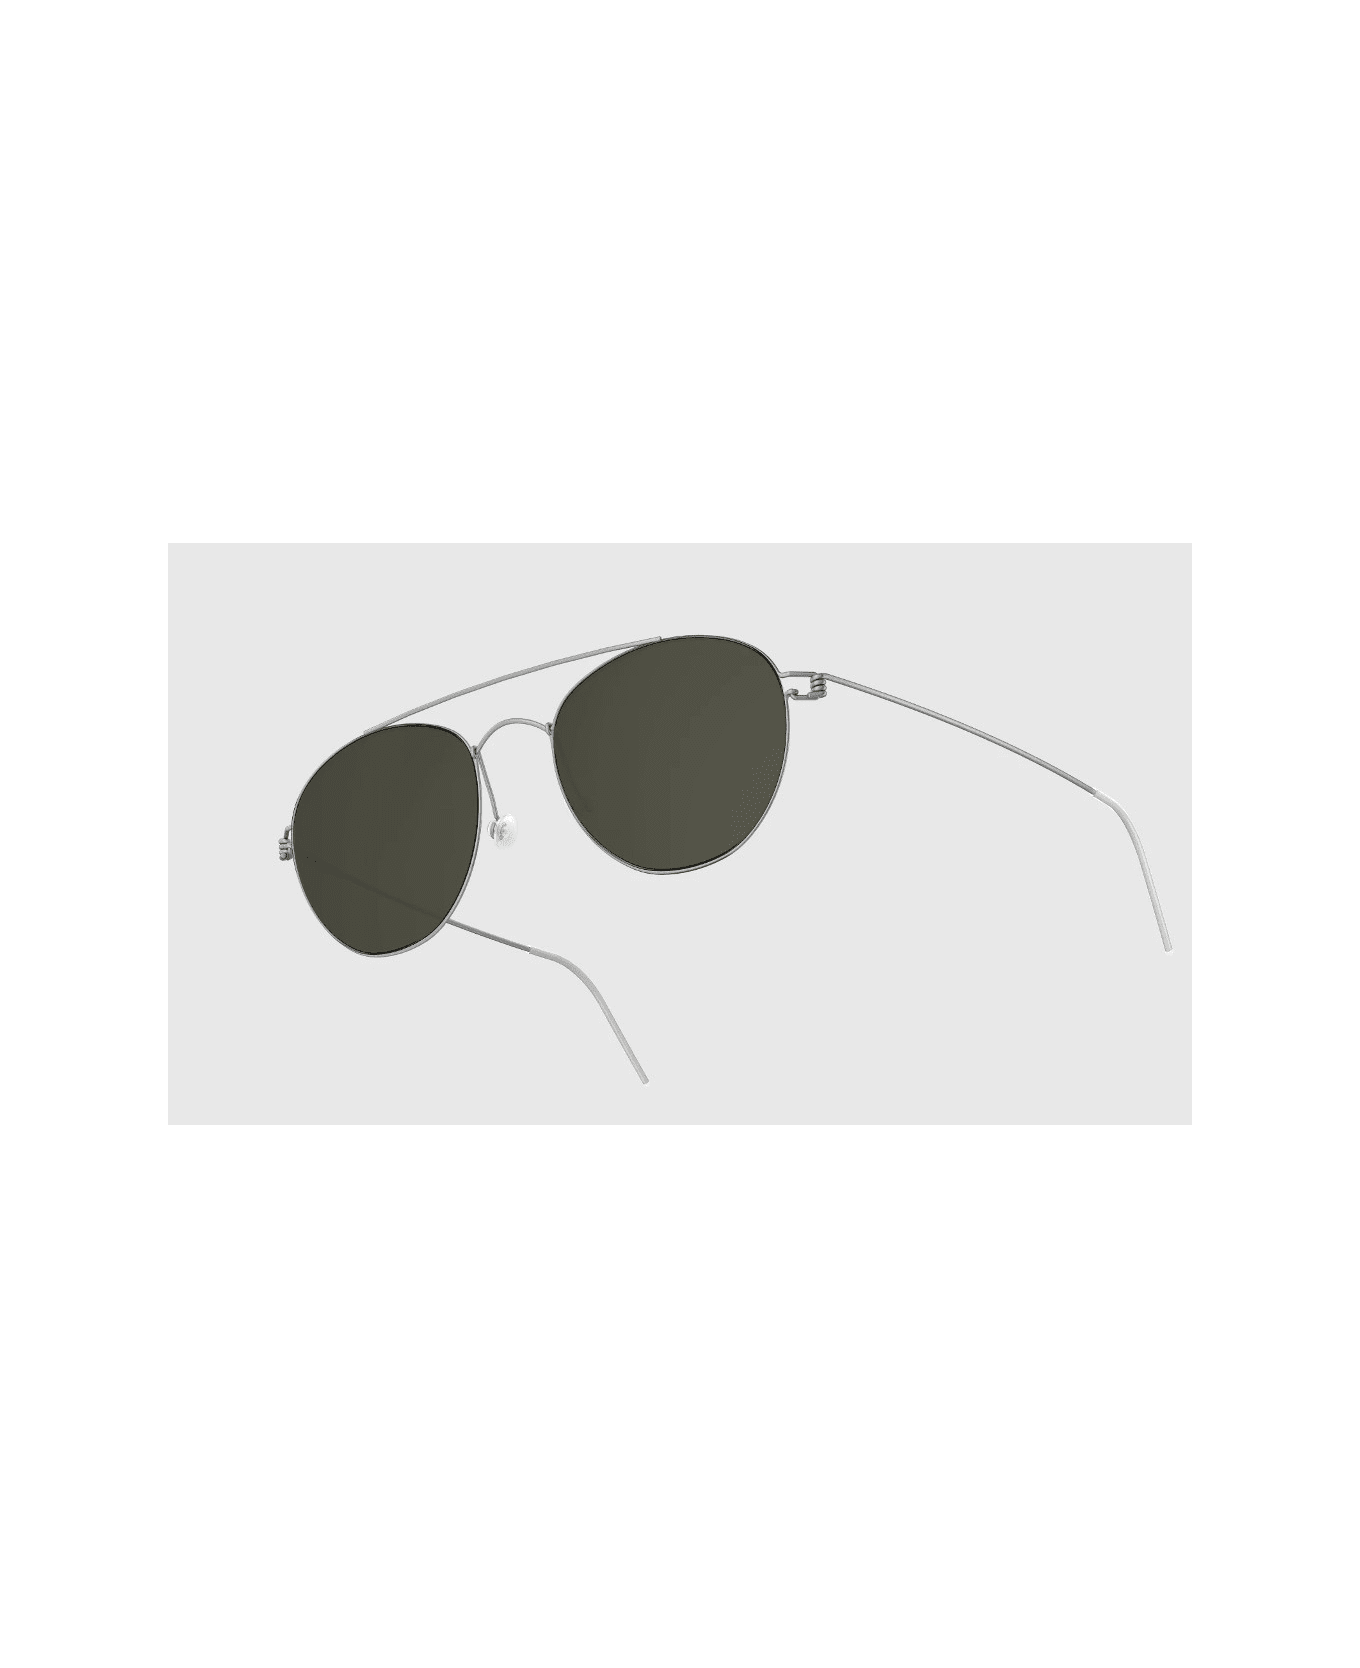 LINDBERG SR 8212 10 Sunglasses